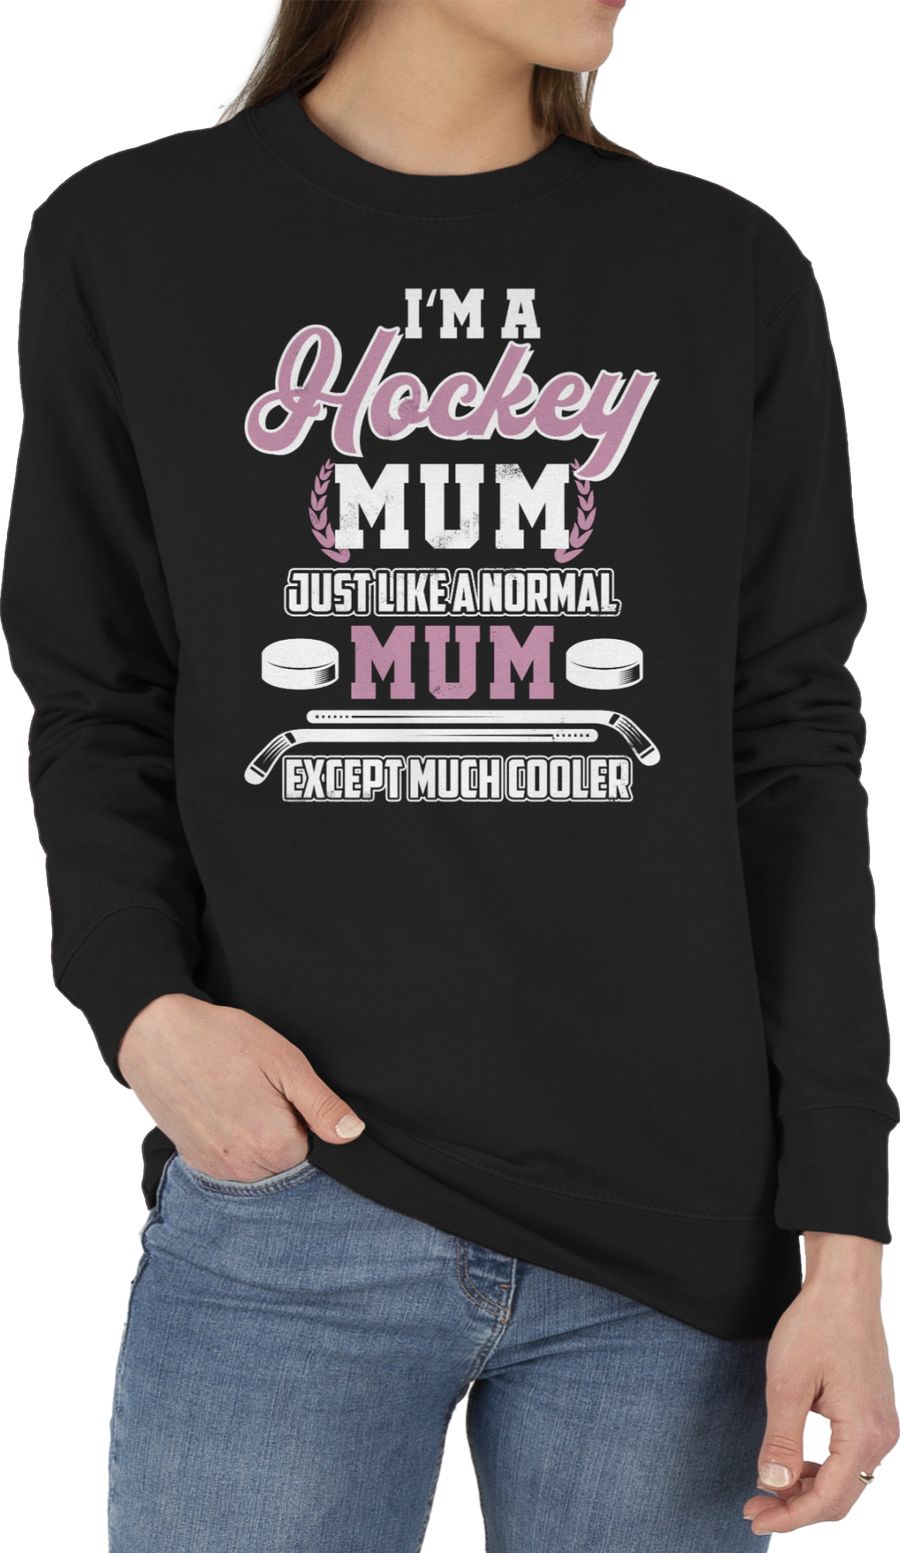 I'm a Hockey Mum- Just like a normal Mum - Except much cooler - Weiß